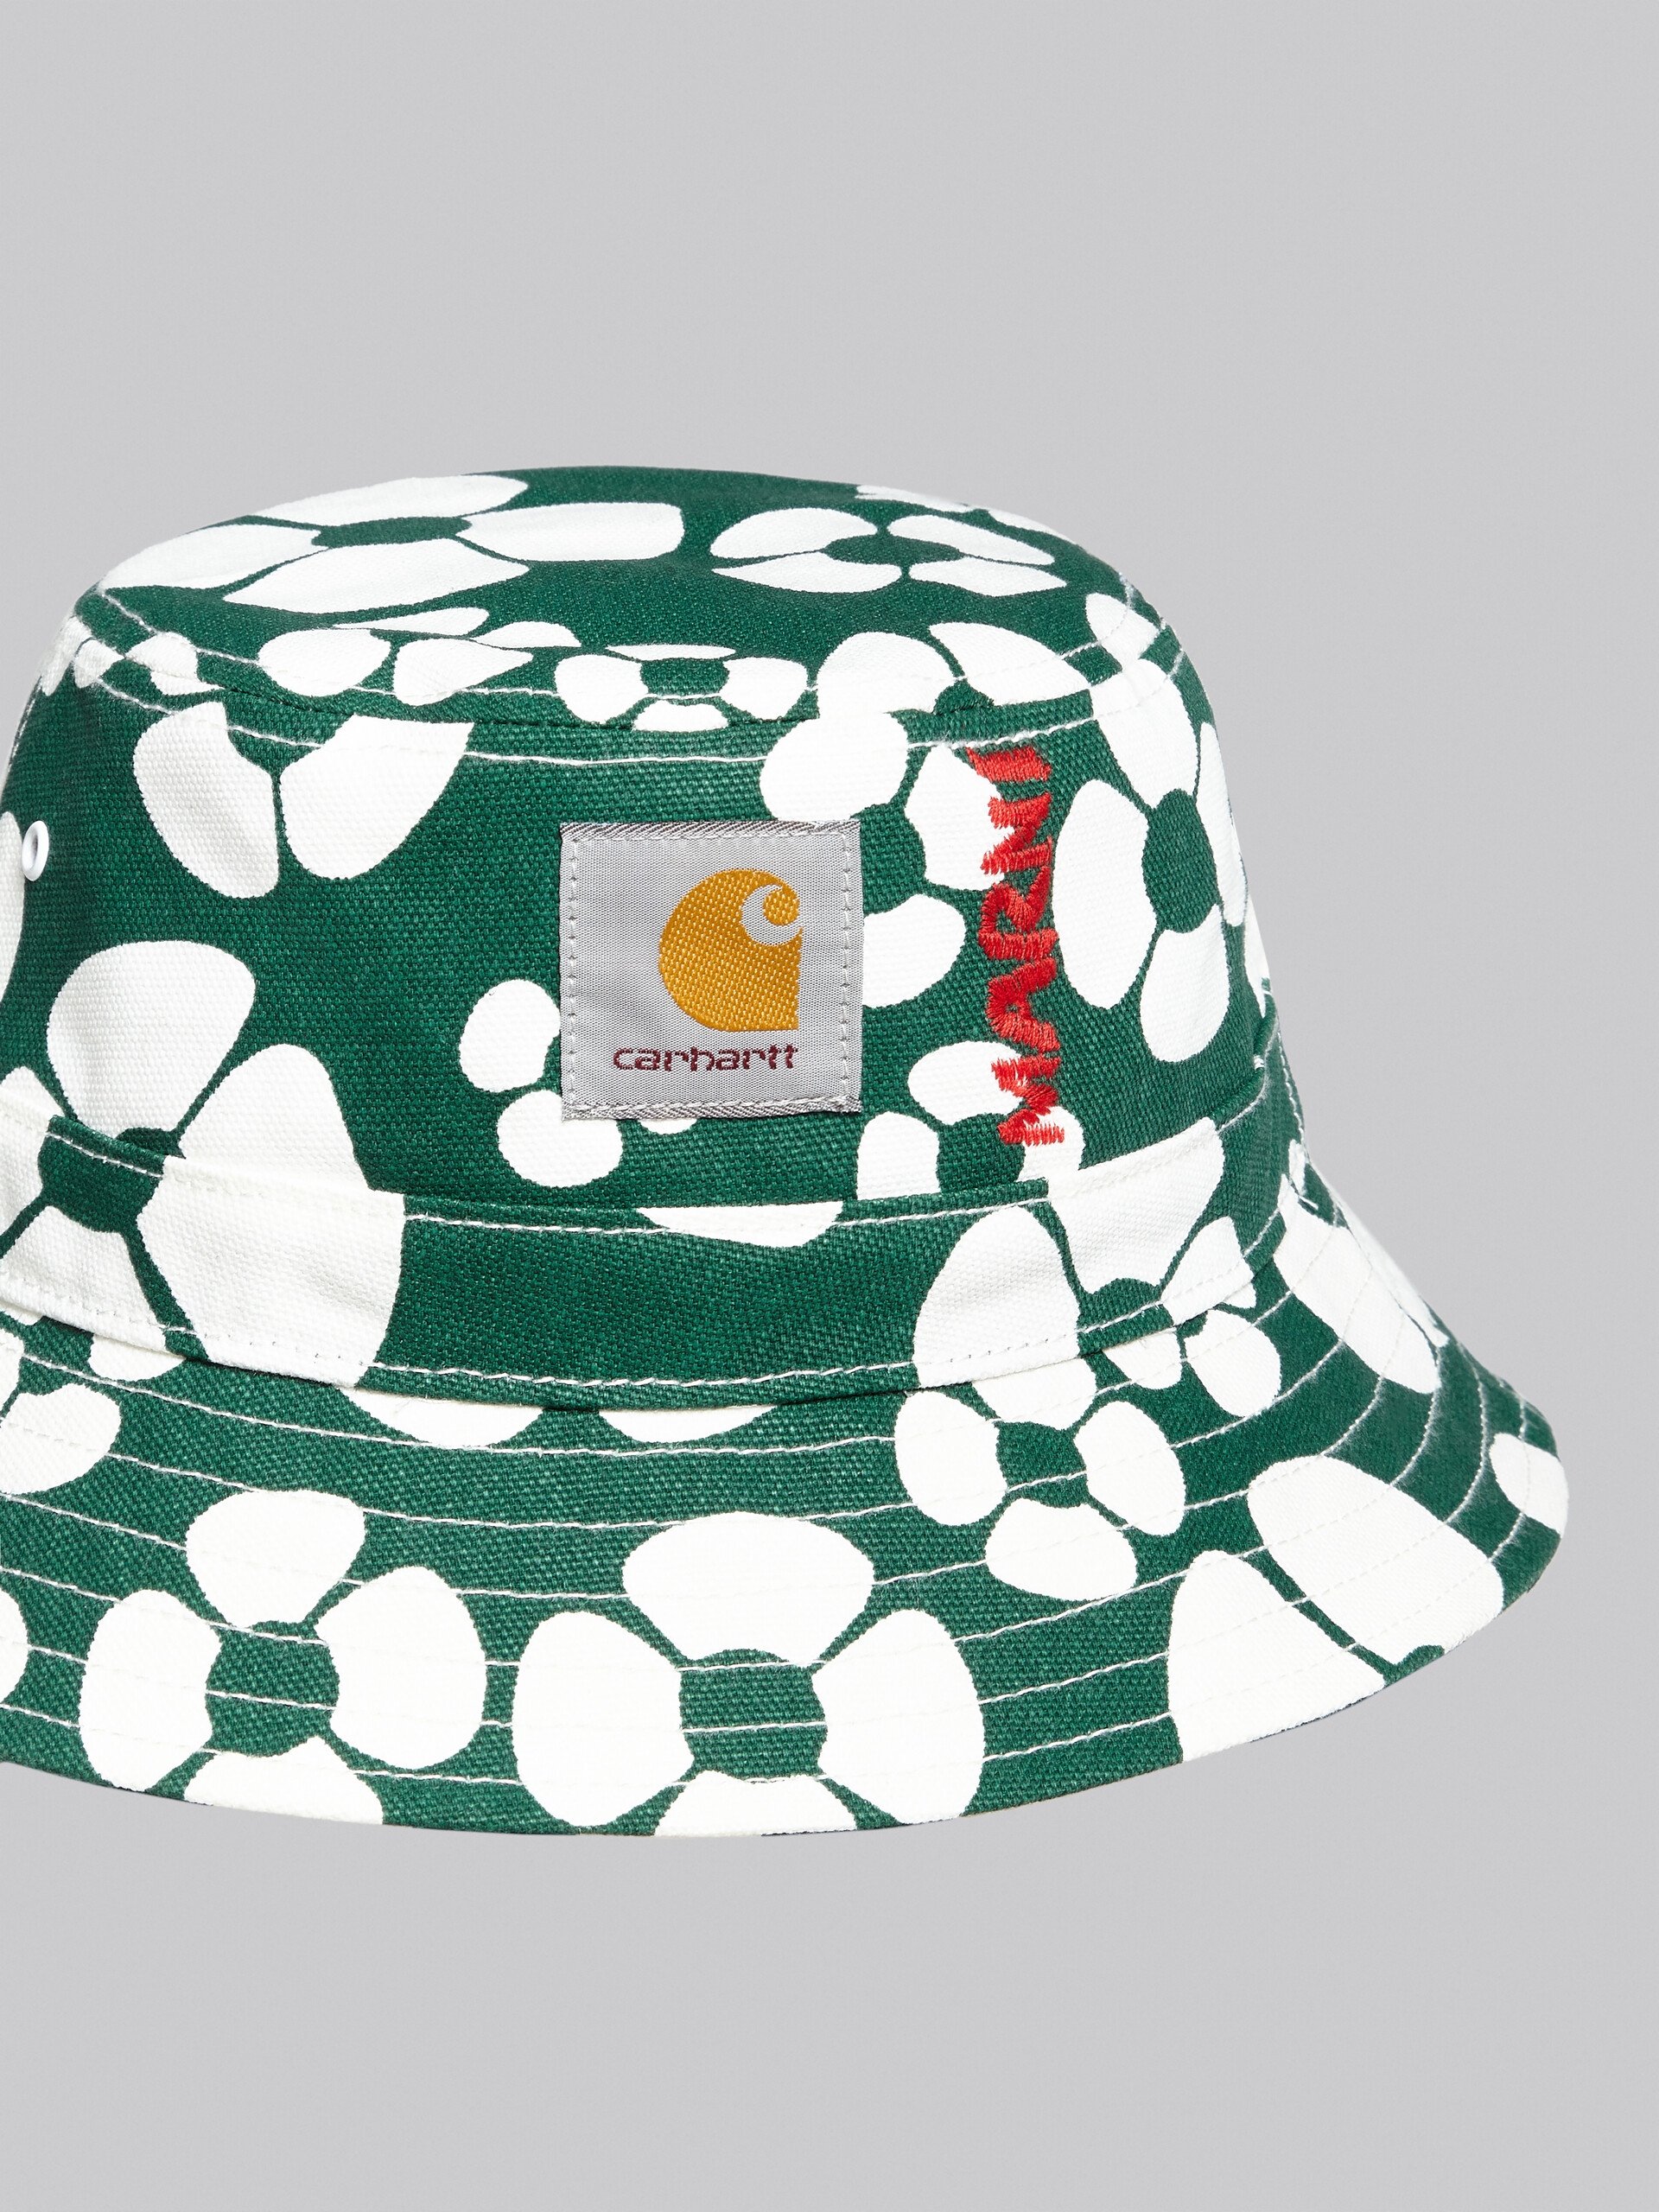 MARNI x CARHARTT WIP - Cappello bucket verde - Cappelli - Image 4